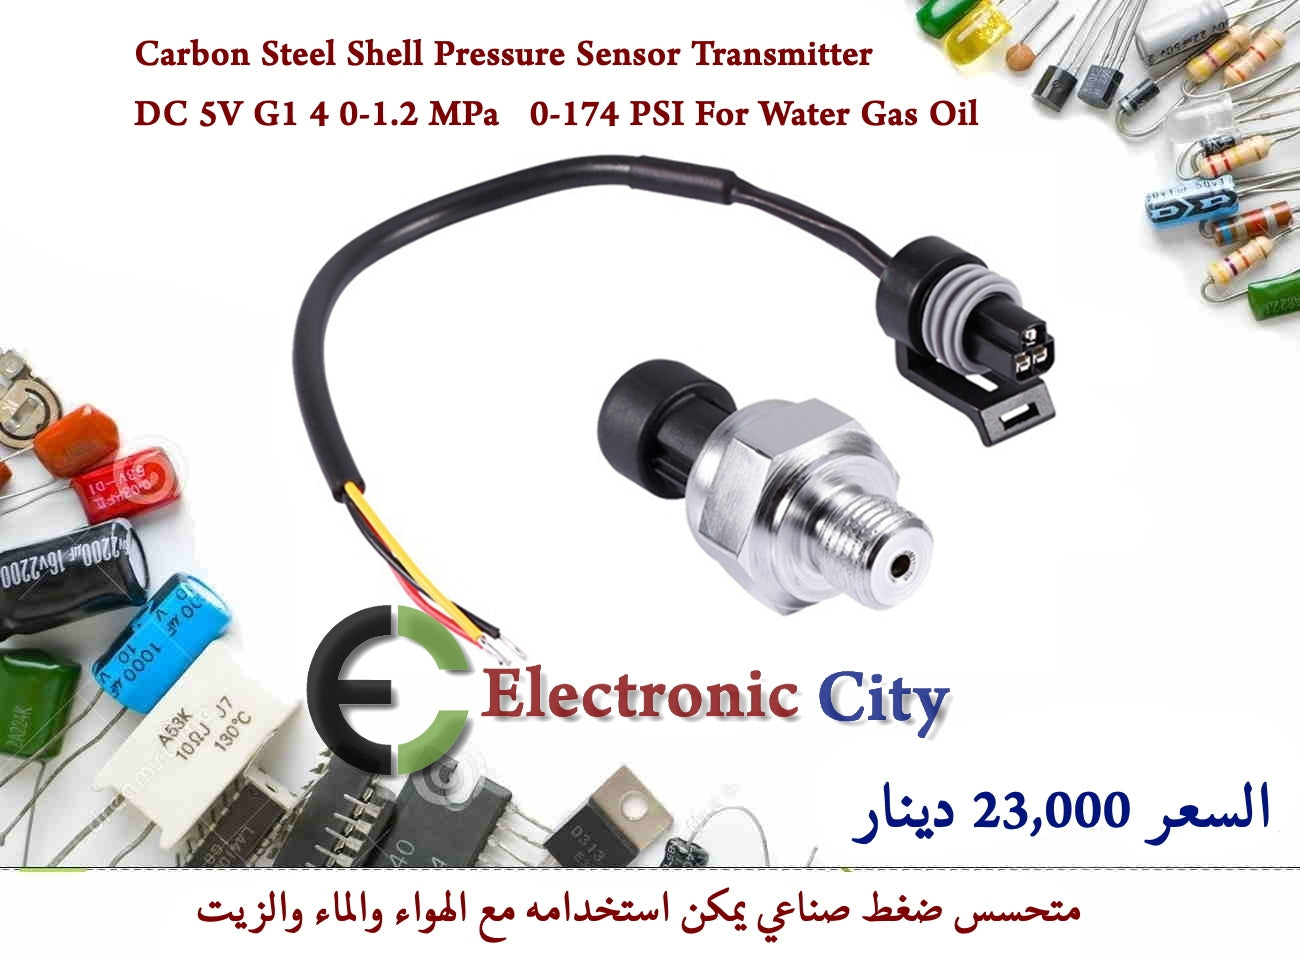 Carbon Steel Shell Pressure Sensor Transmitter DC 5V G1 4 0-1.2 MPa   0-174 PSI For Water Gas Oil